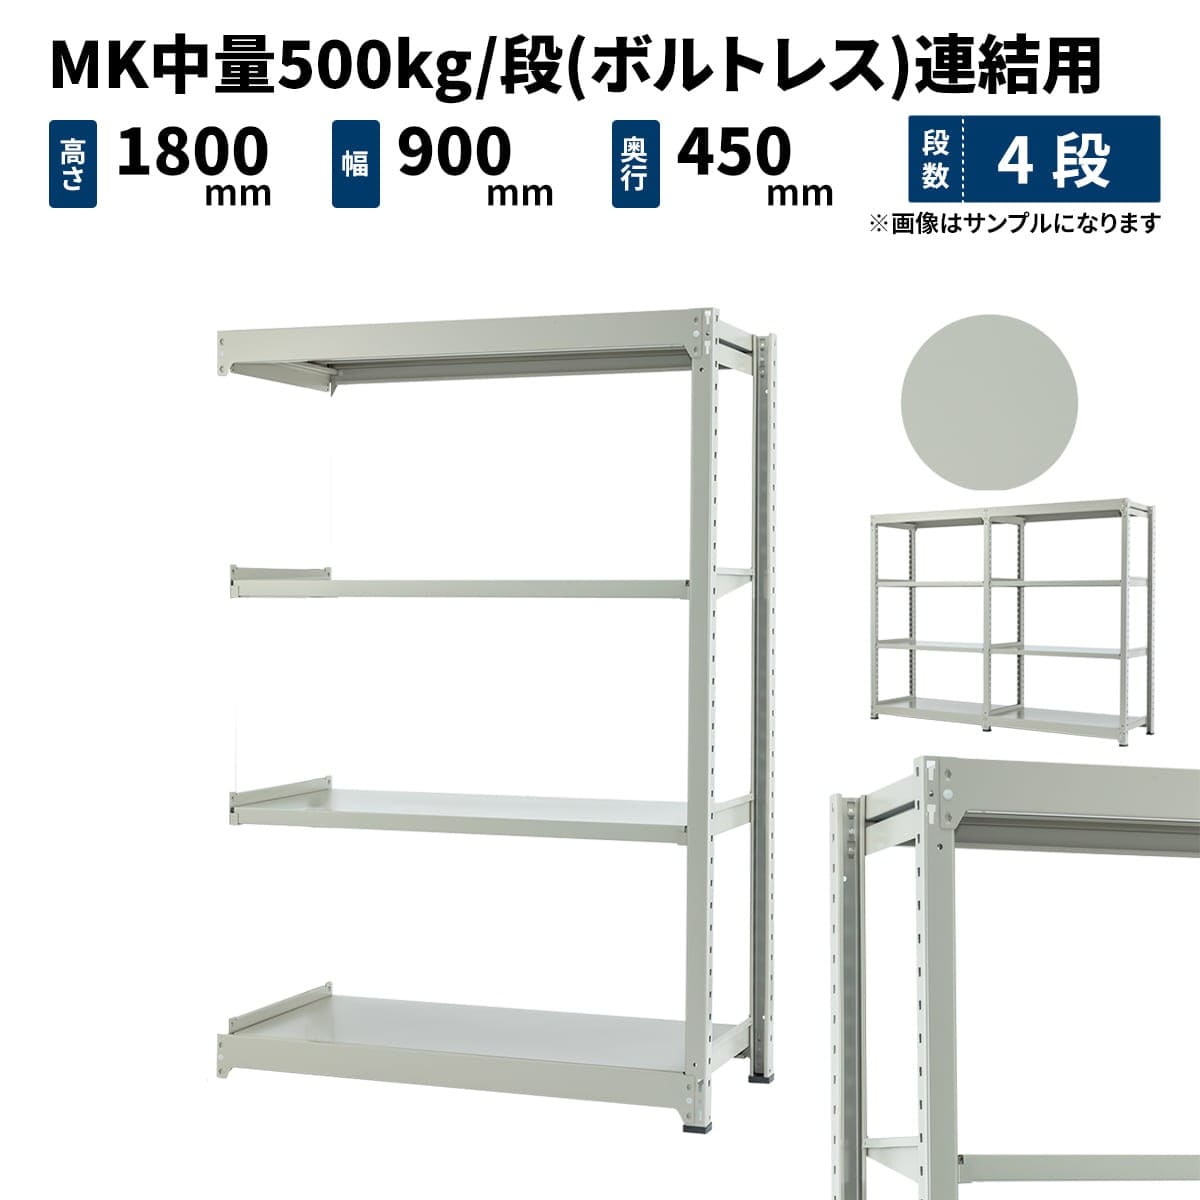 MK中量 500kg/段 (ボルトレス) 高さ1800×幅900×奥行450mm 連結の商品